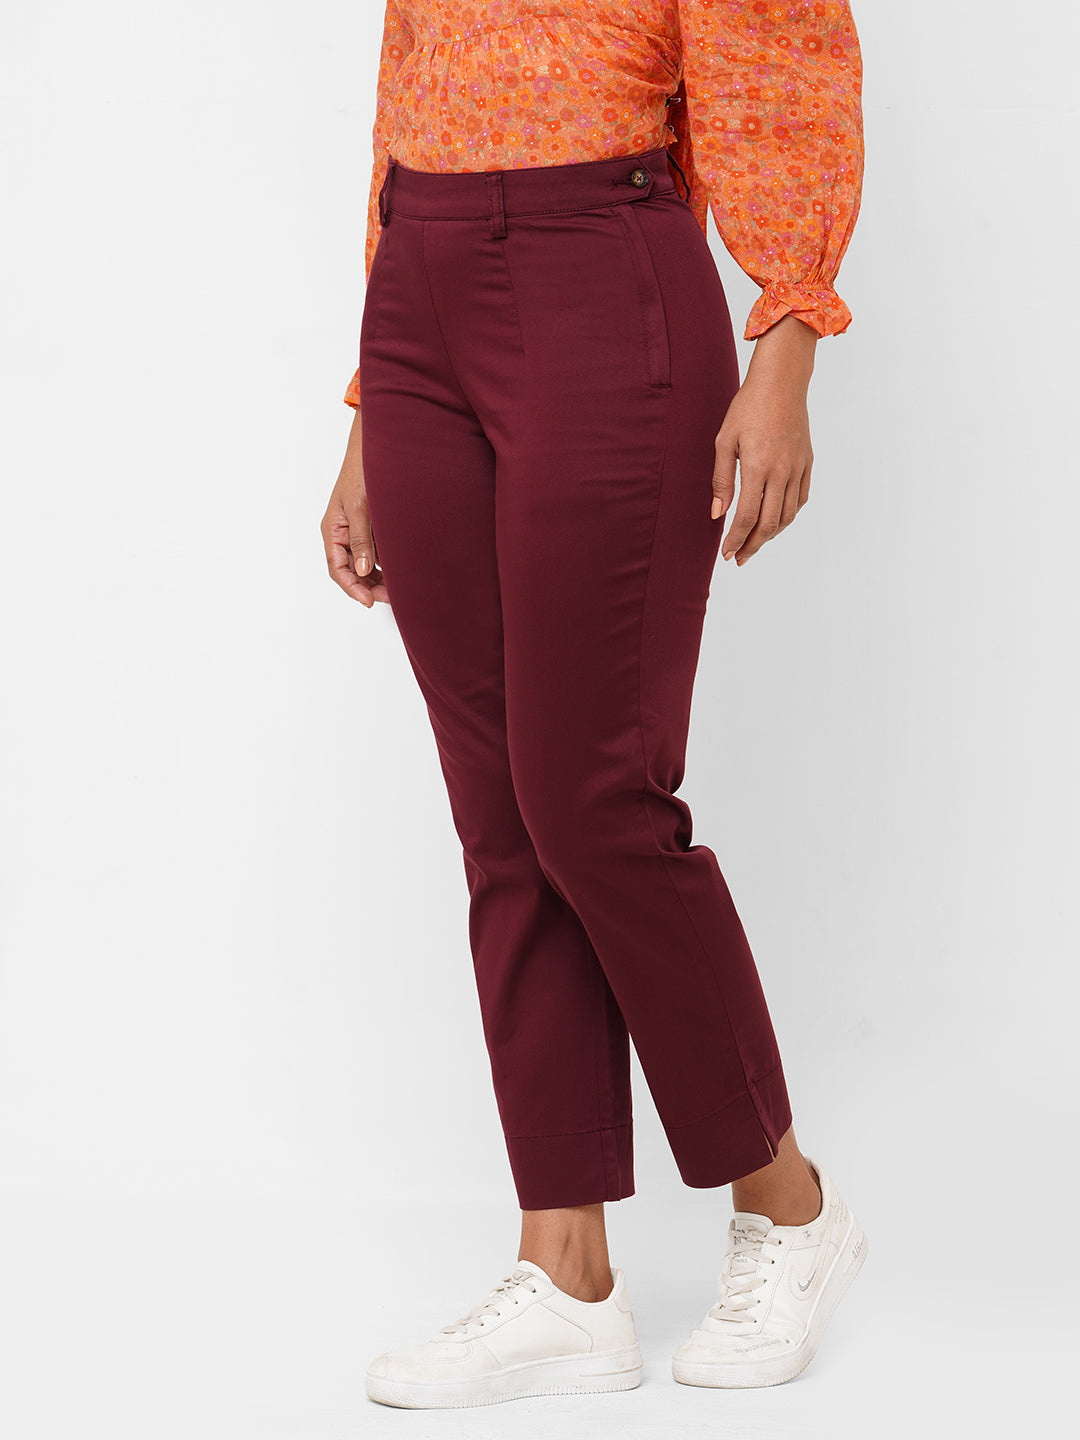 Women's Cotton Lycra Maroon/Red Regular Fit Pant